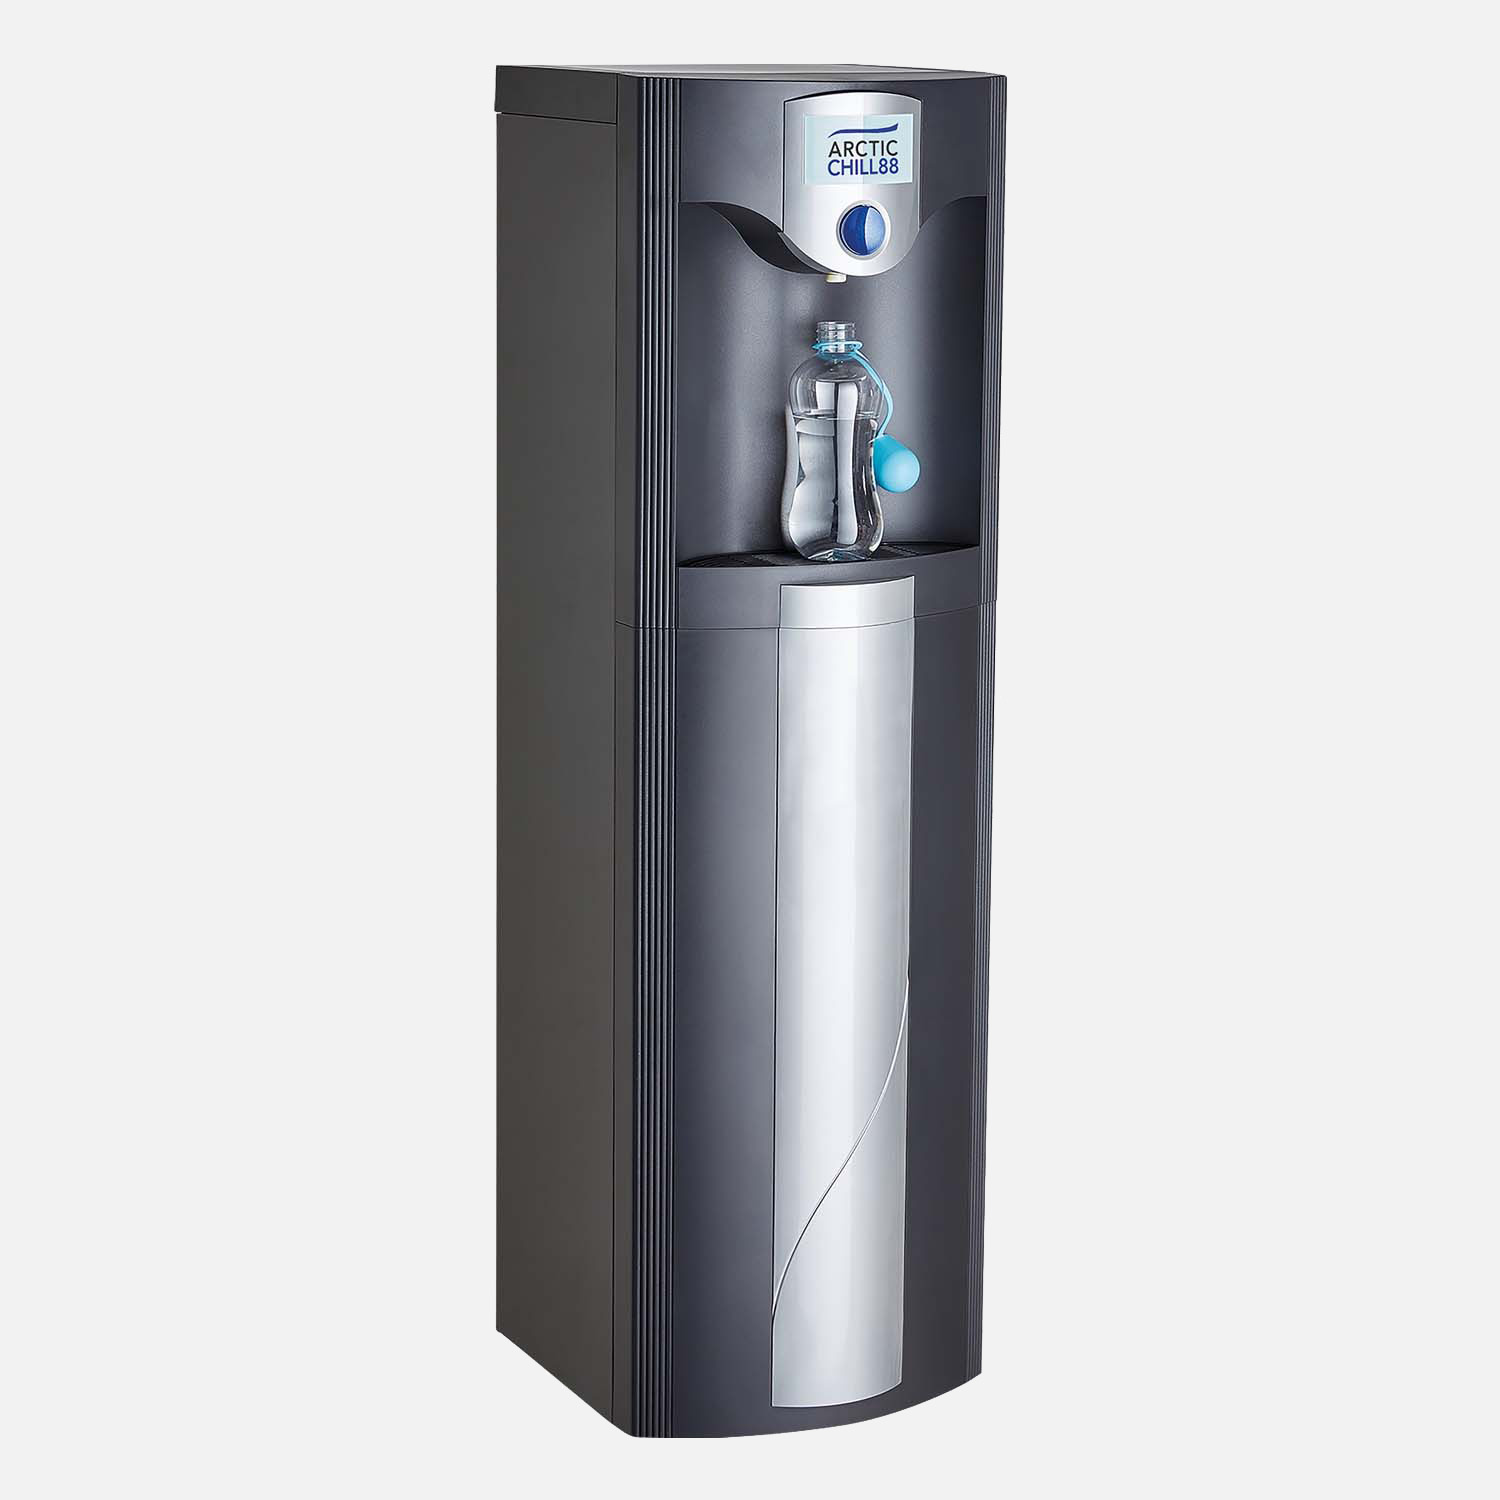 Water-Cooler-Dispenser-ArcticChill-88-Floor-Standing-Mains-Fed-1